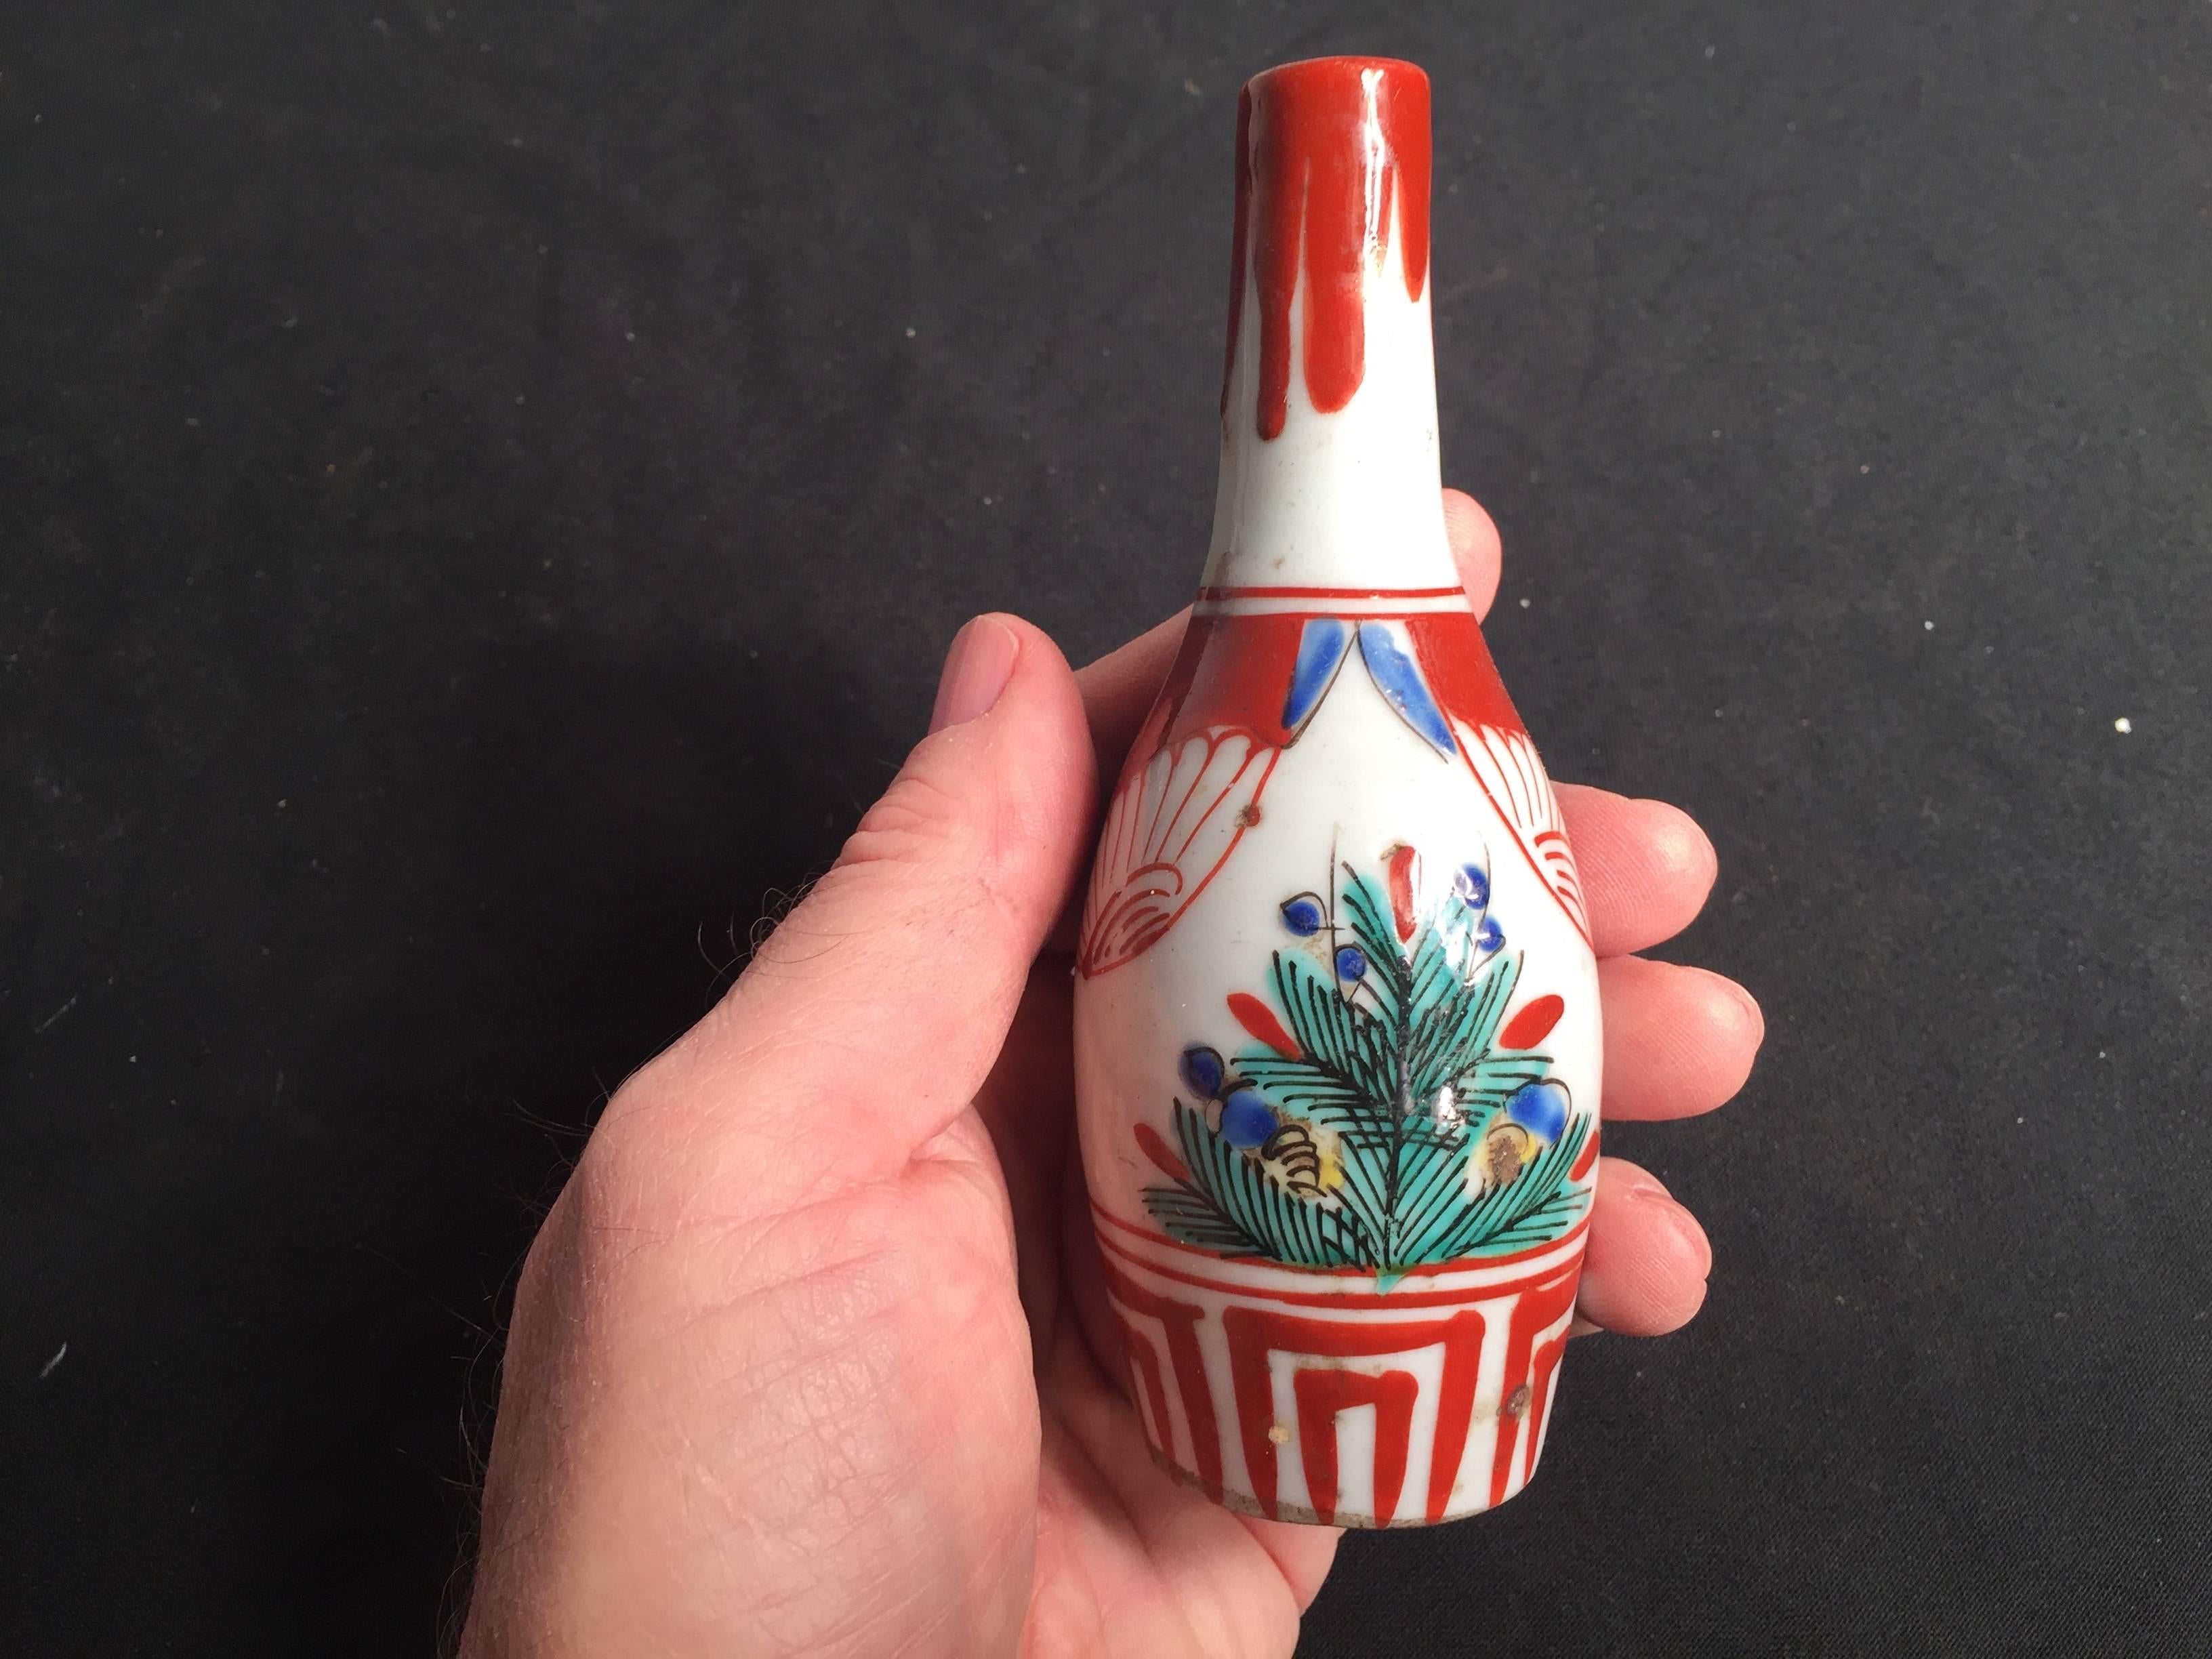 Japanese Antique Hand-Painted Ceramic Sake Bottles Collection, 19th Century 2